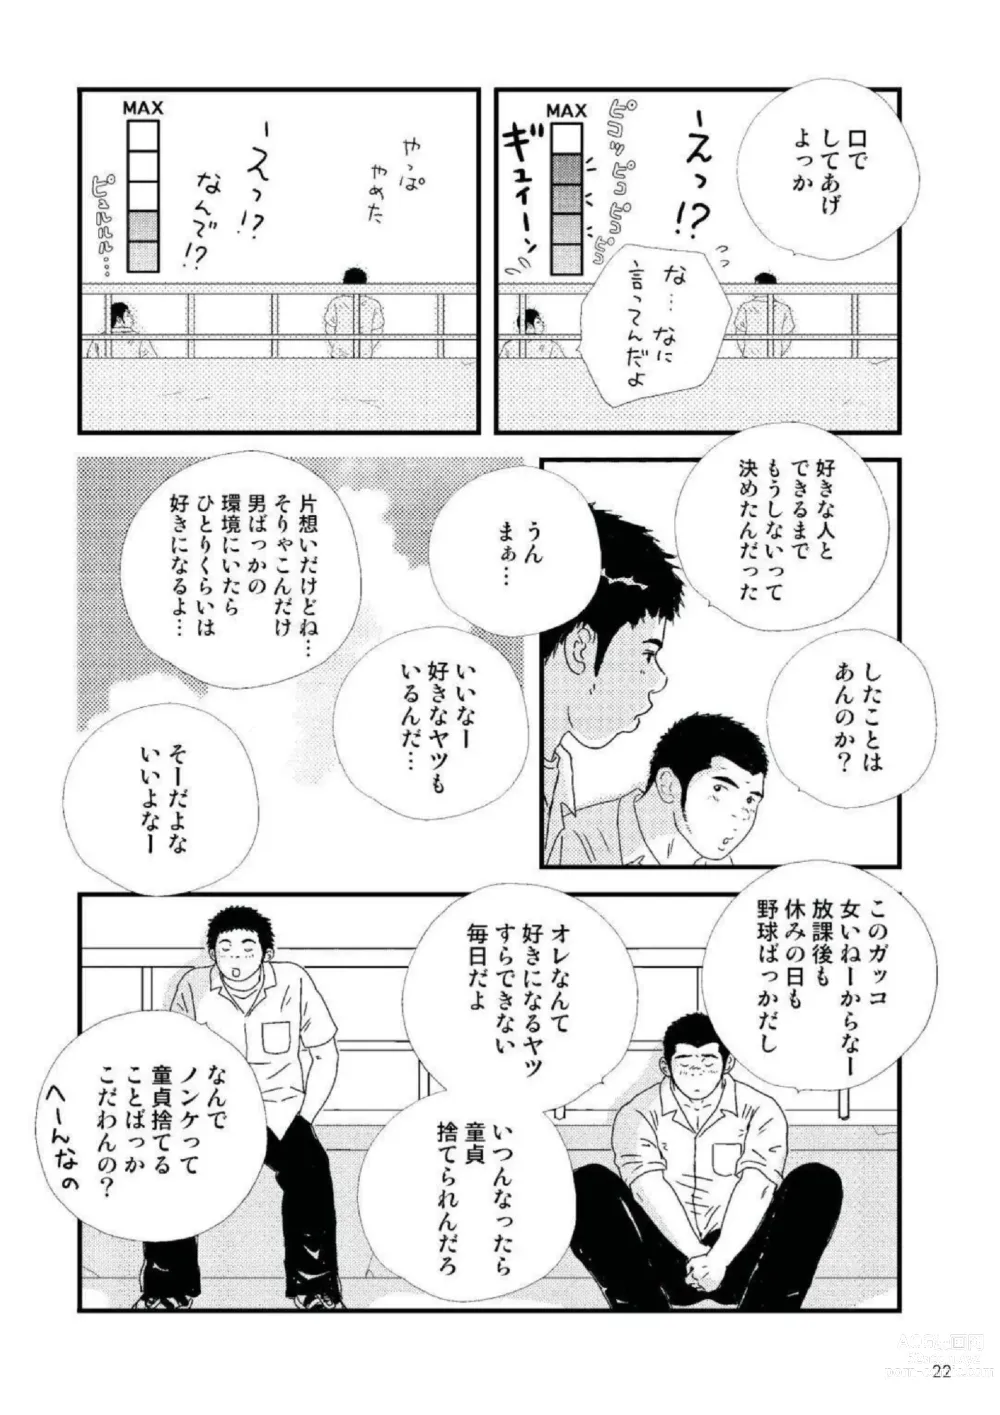 Page 4 of manga SUCK!